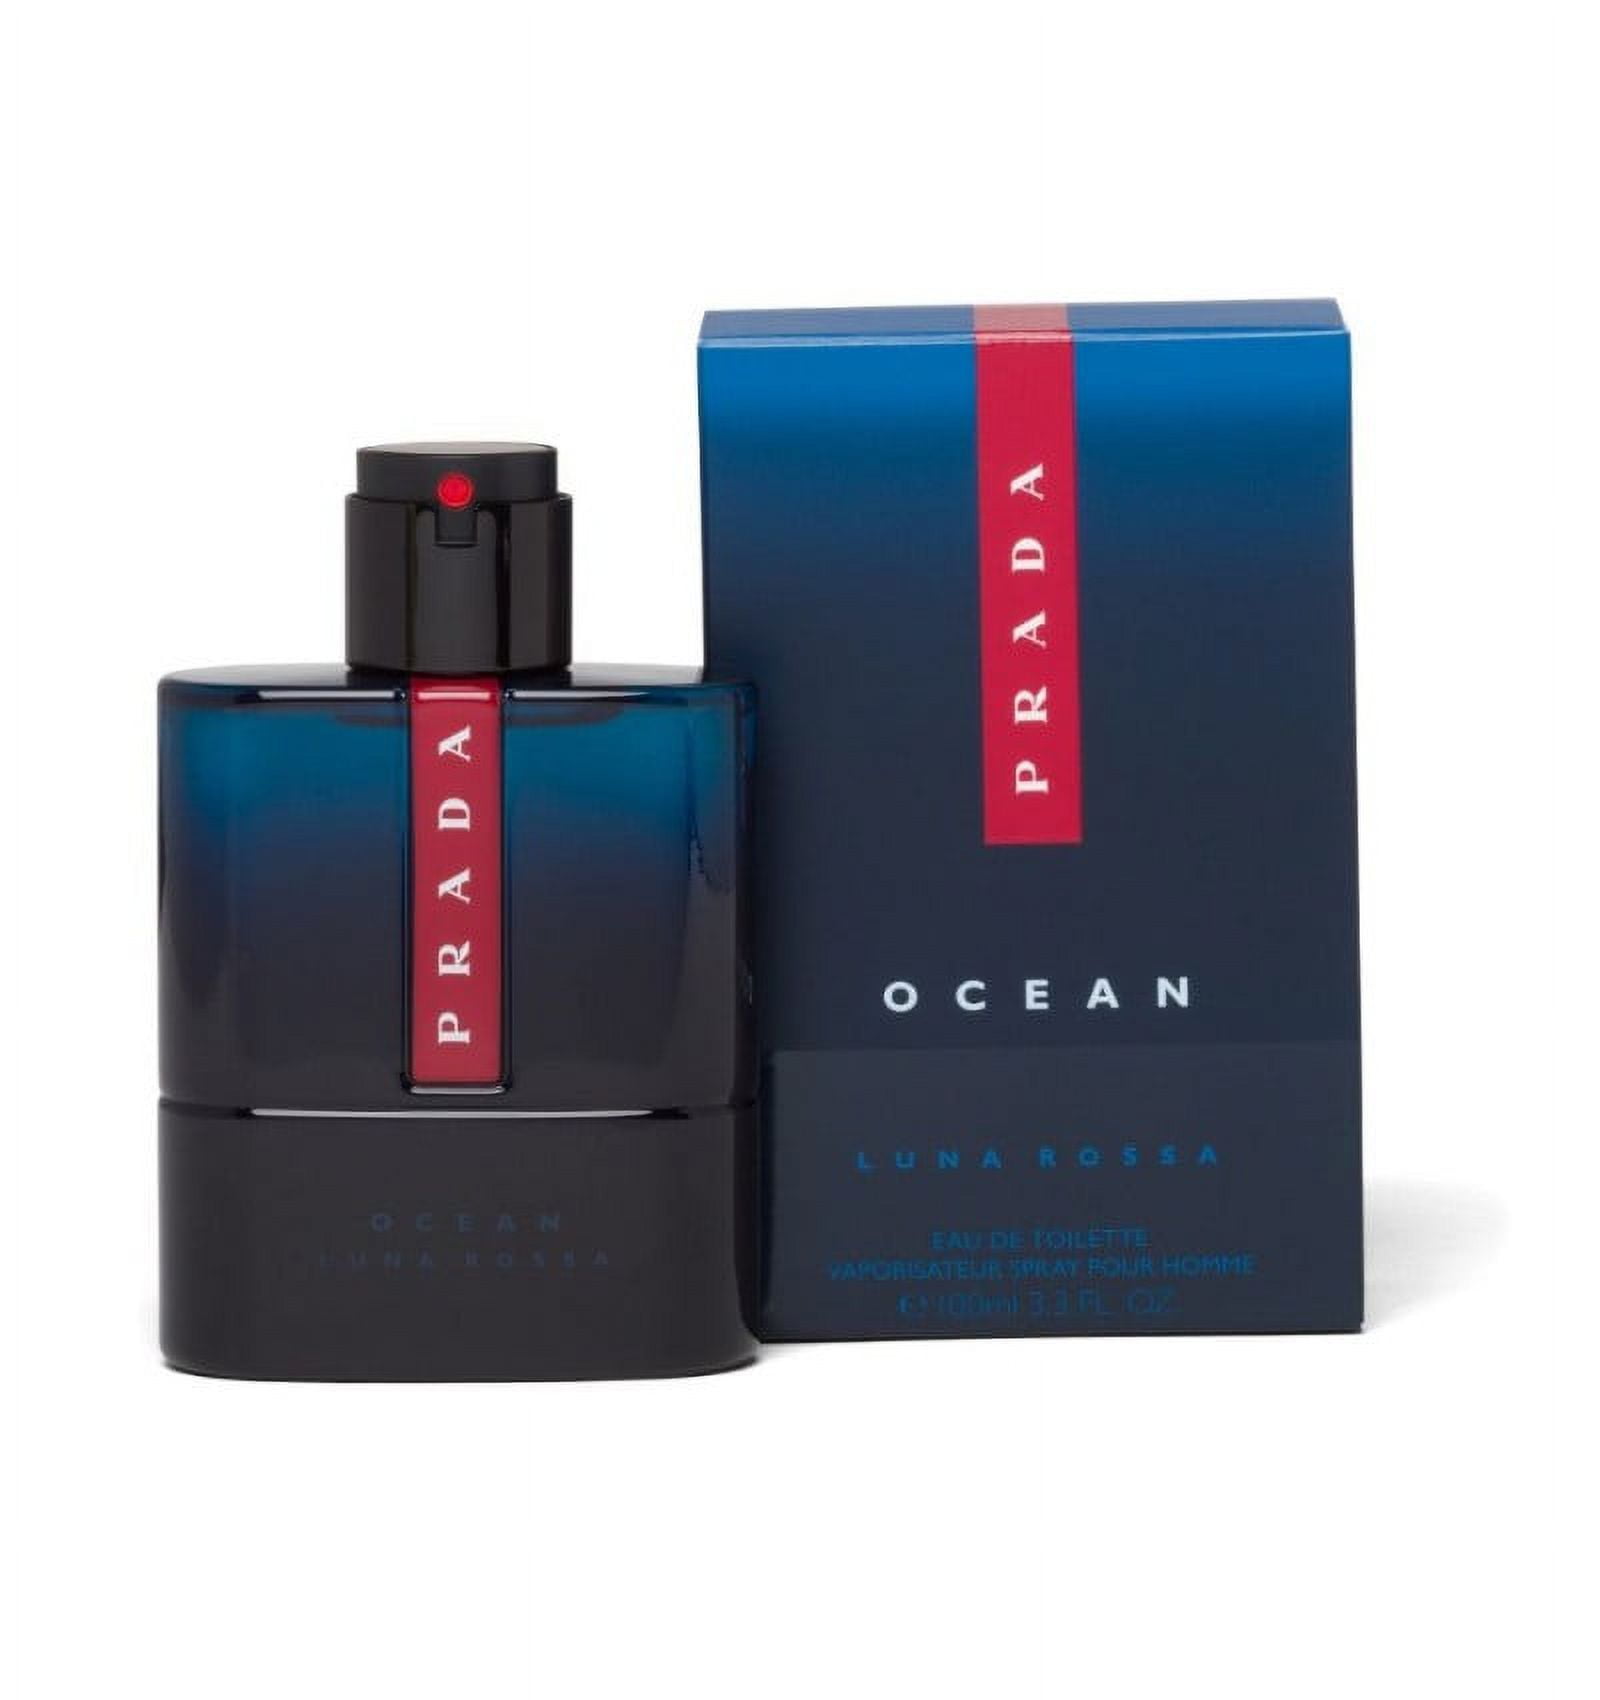 Luna Rossa Ocean Prada cologne - a fragrance for men 2021